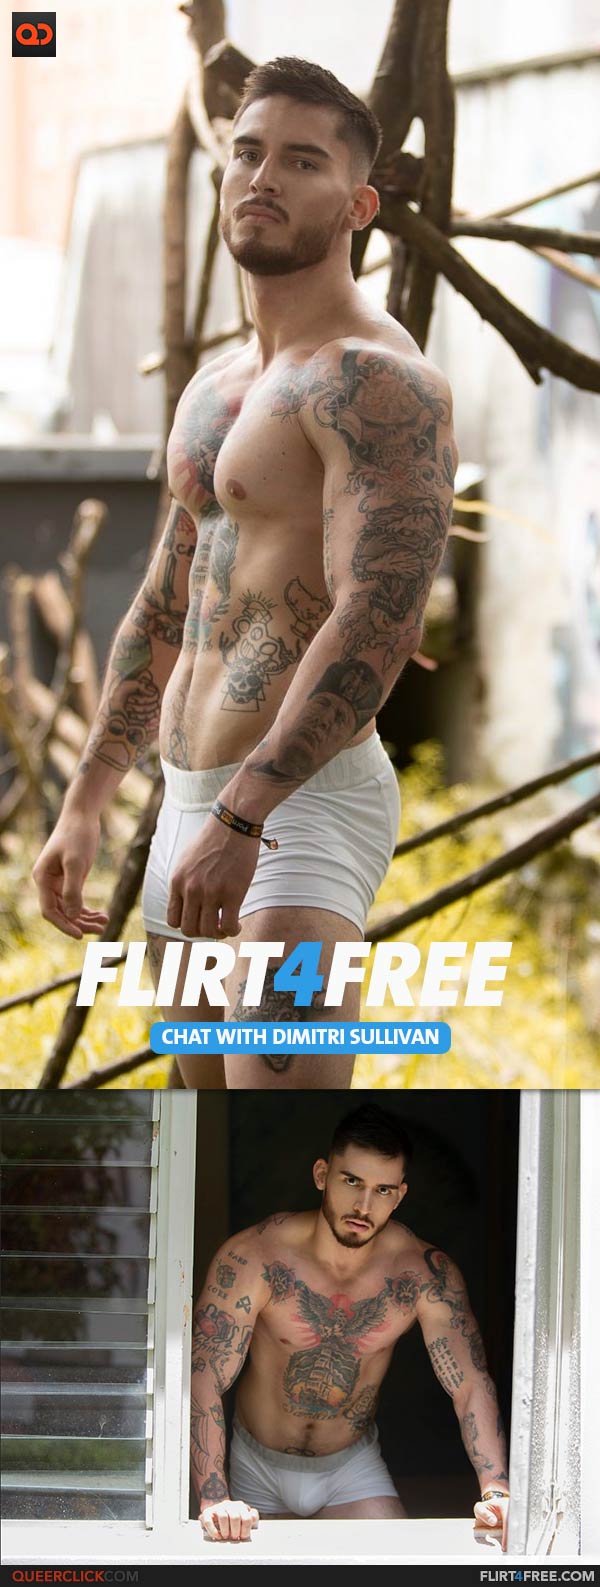 Flirt4Free: Dimitri Sullivan is a Dominant Master